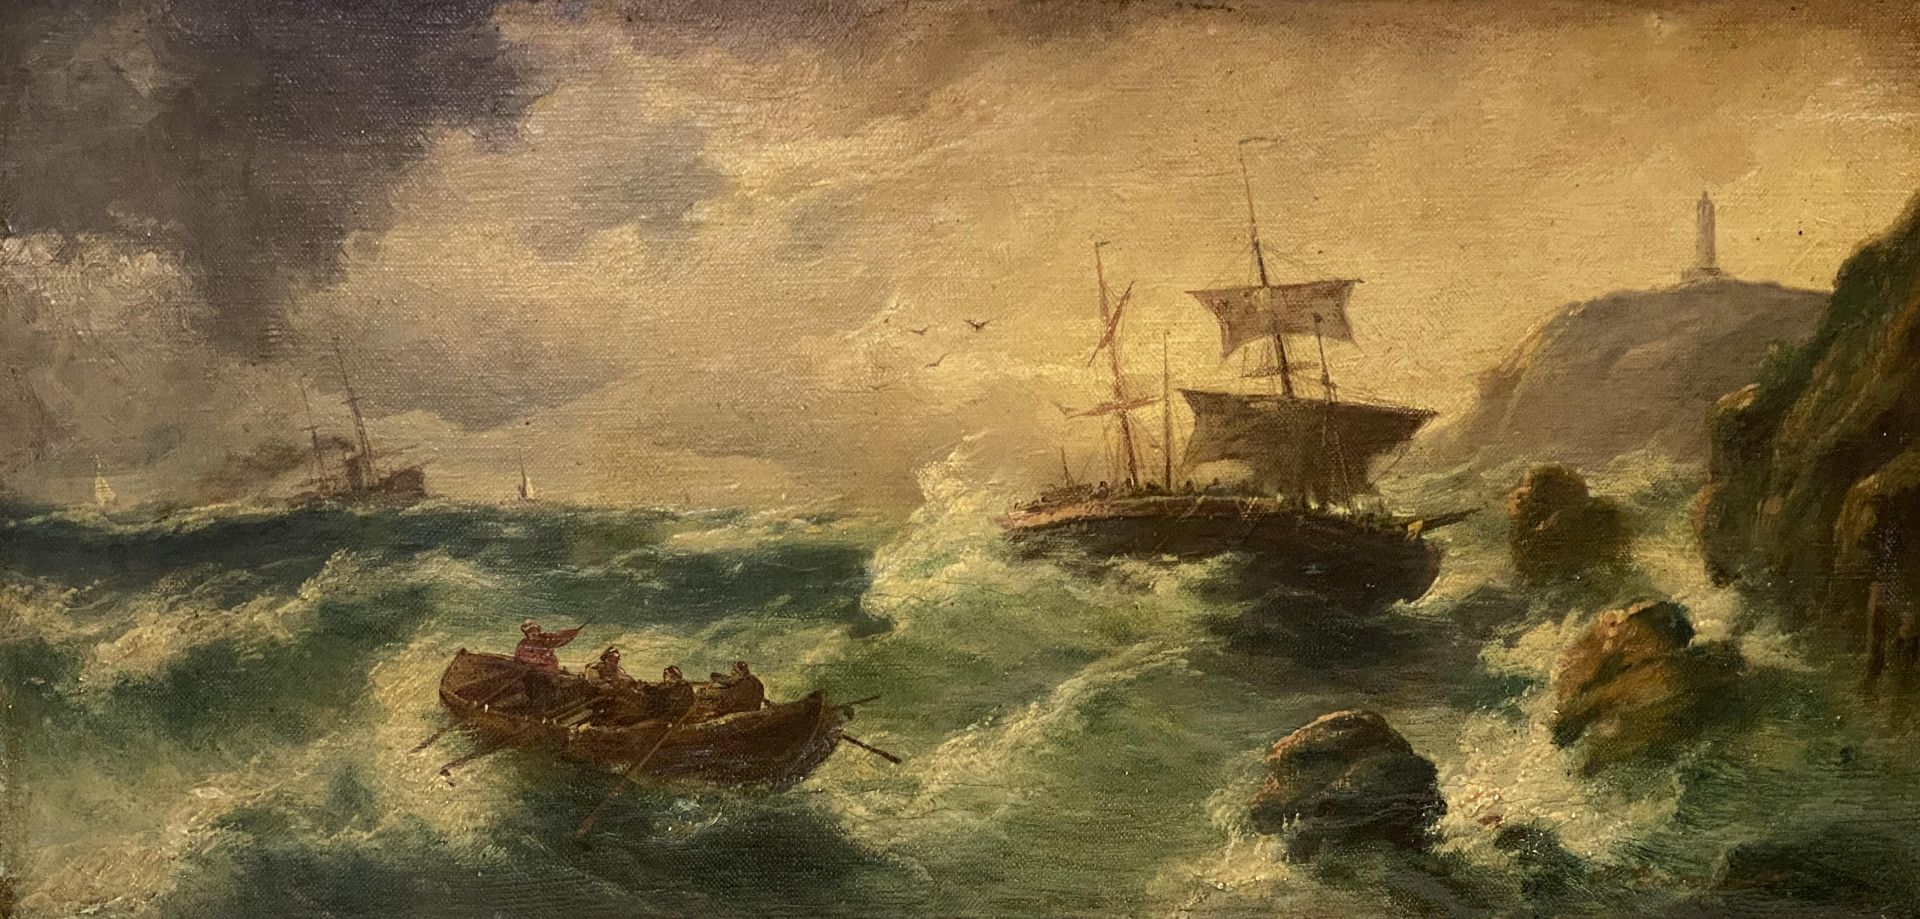 A. Cavalo, Drohender   Schiffbruch  an  stürmischer   Felsenküste